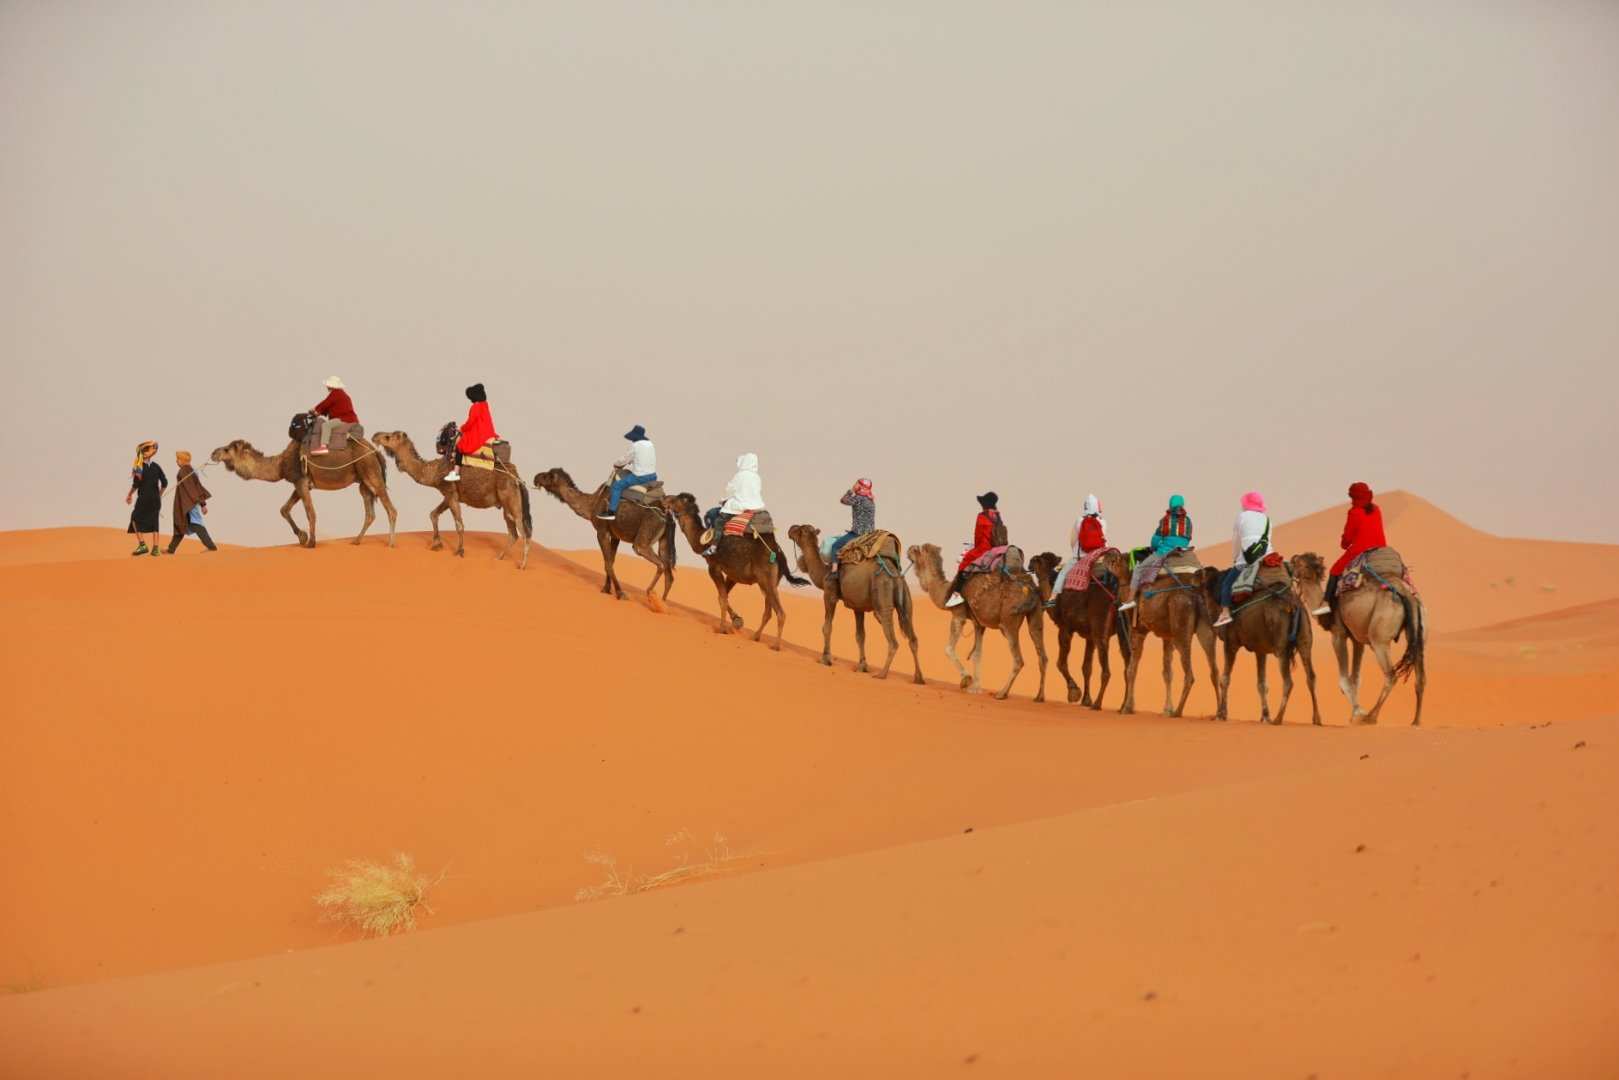 Roteiro de 10 dias desde Tanger - Fez - deserto do Saara terminando em Marrakech